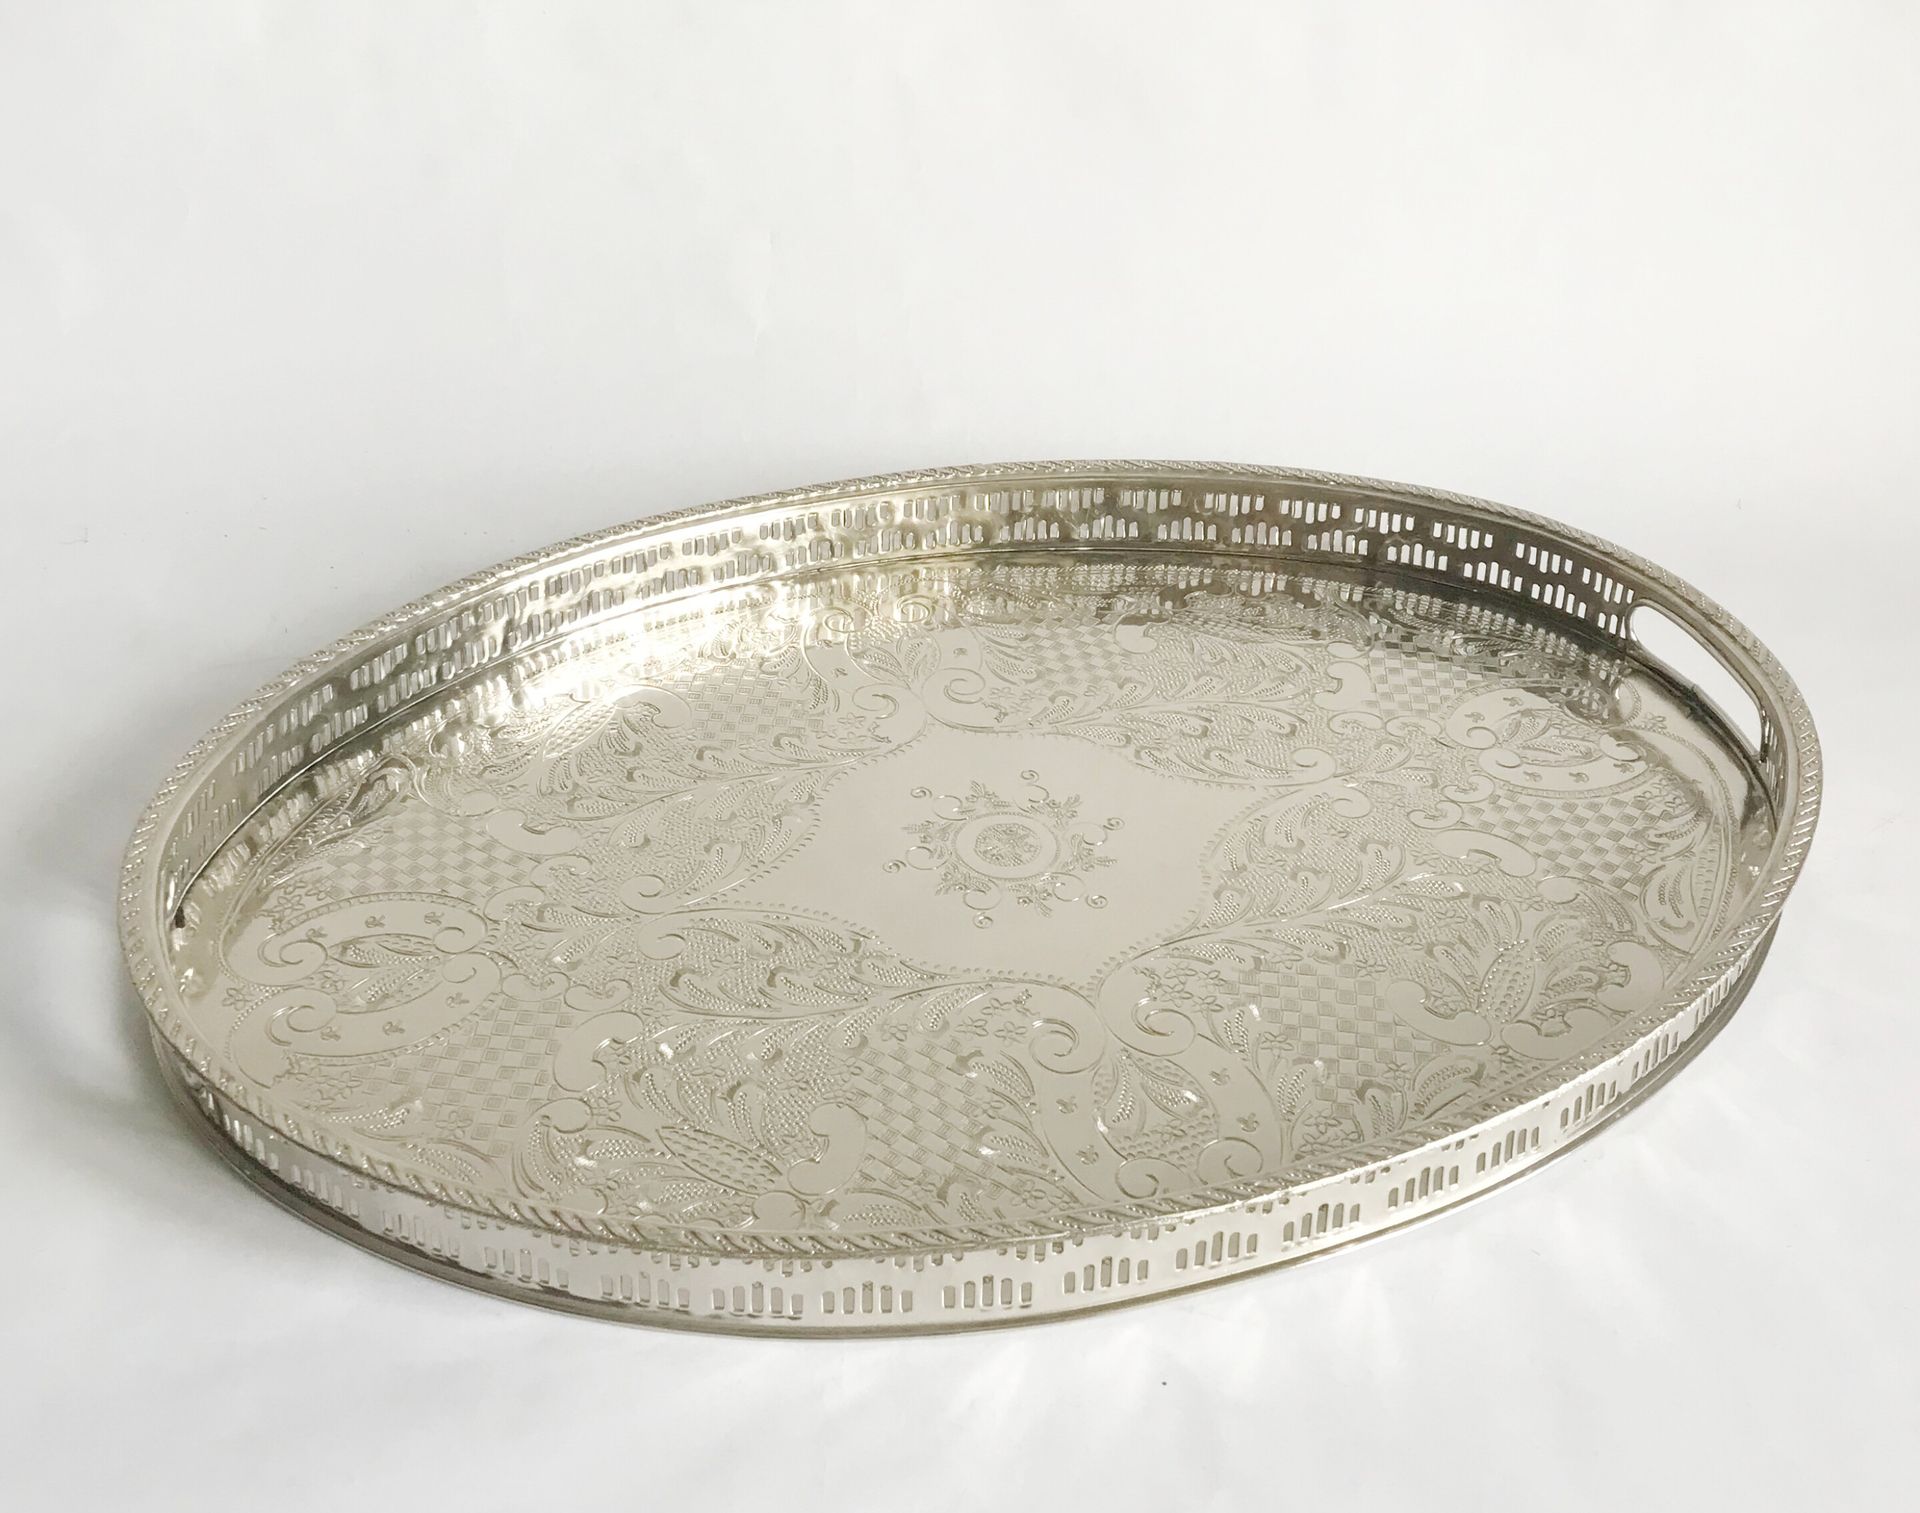 Null 大型椭圆形镀银托盘，底部有雕刻装饰，并有镂空的边框。

摩洛哥作品 - FES标志

长：53厘米